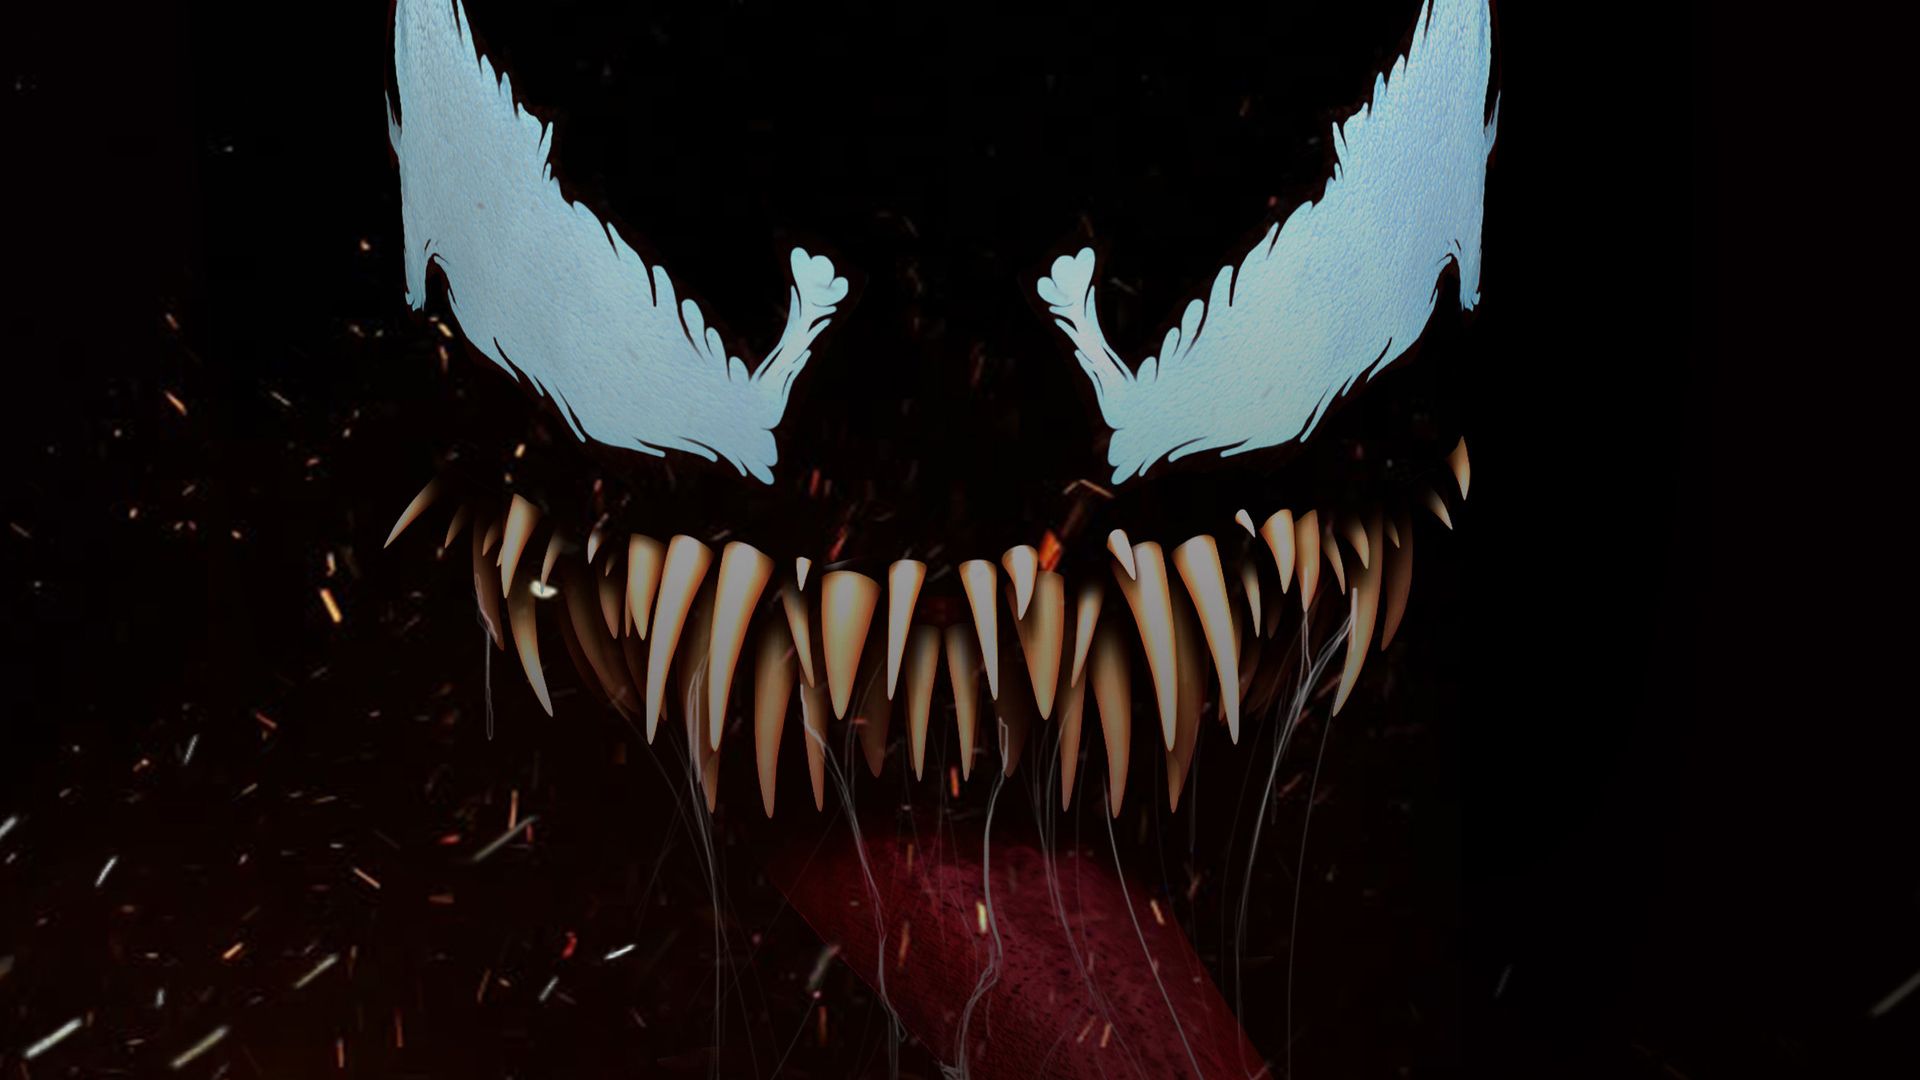 Venom Face Wallpaper Free Venom Face Background